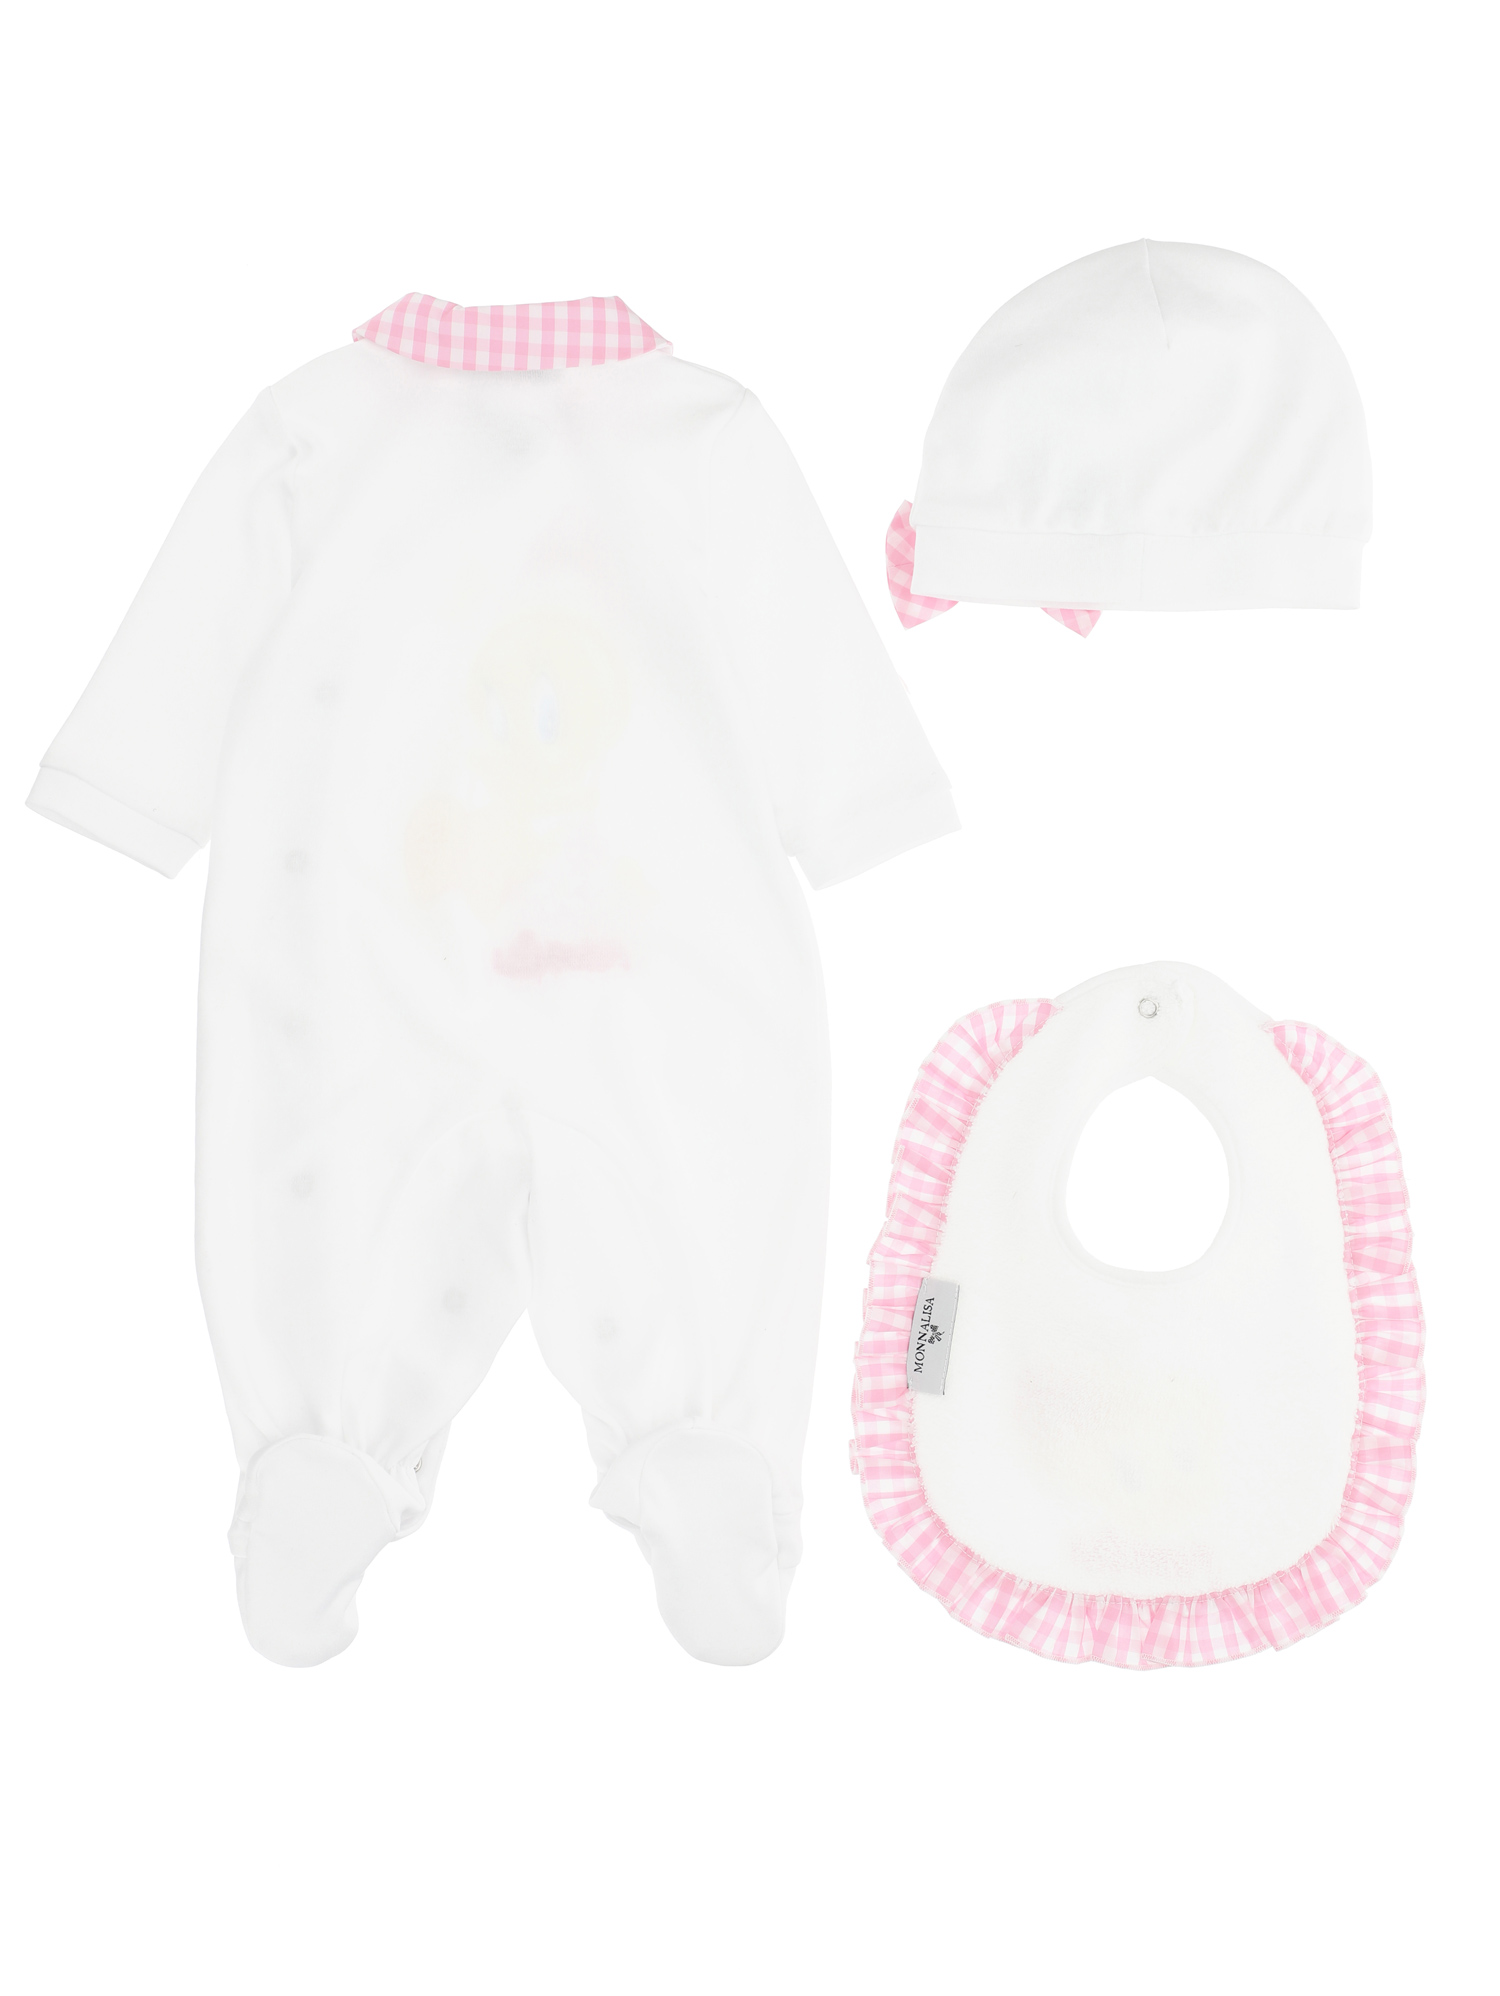 Monnalisa Clothing Outfit Sets Sets Tweety playsuit bib hat newborn set 